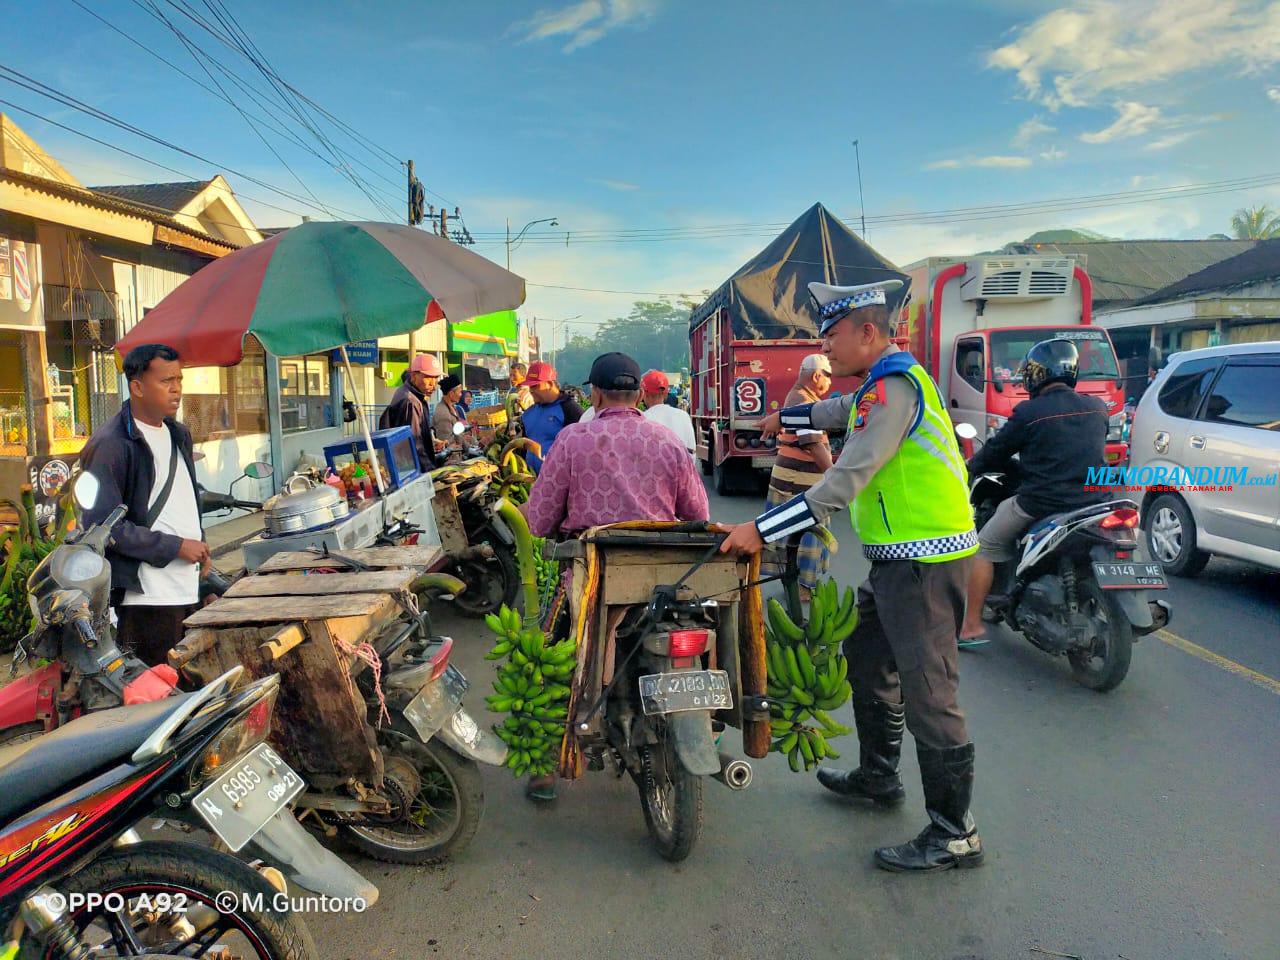 Hindari Kemacetan, Personil Pospam Atur Lalin di Pasar Tumpah Ranuyoso